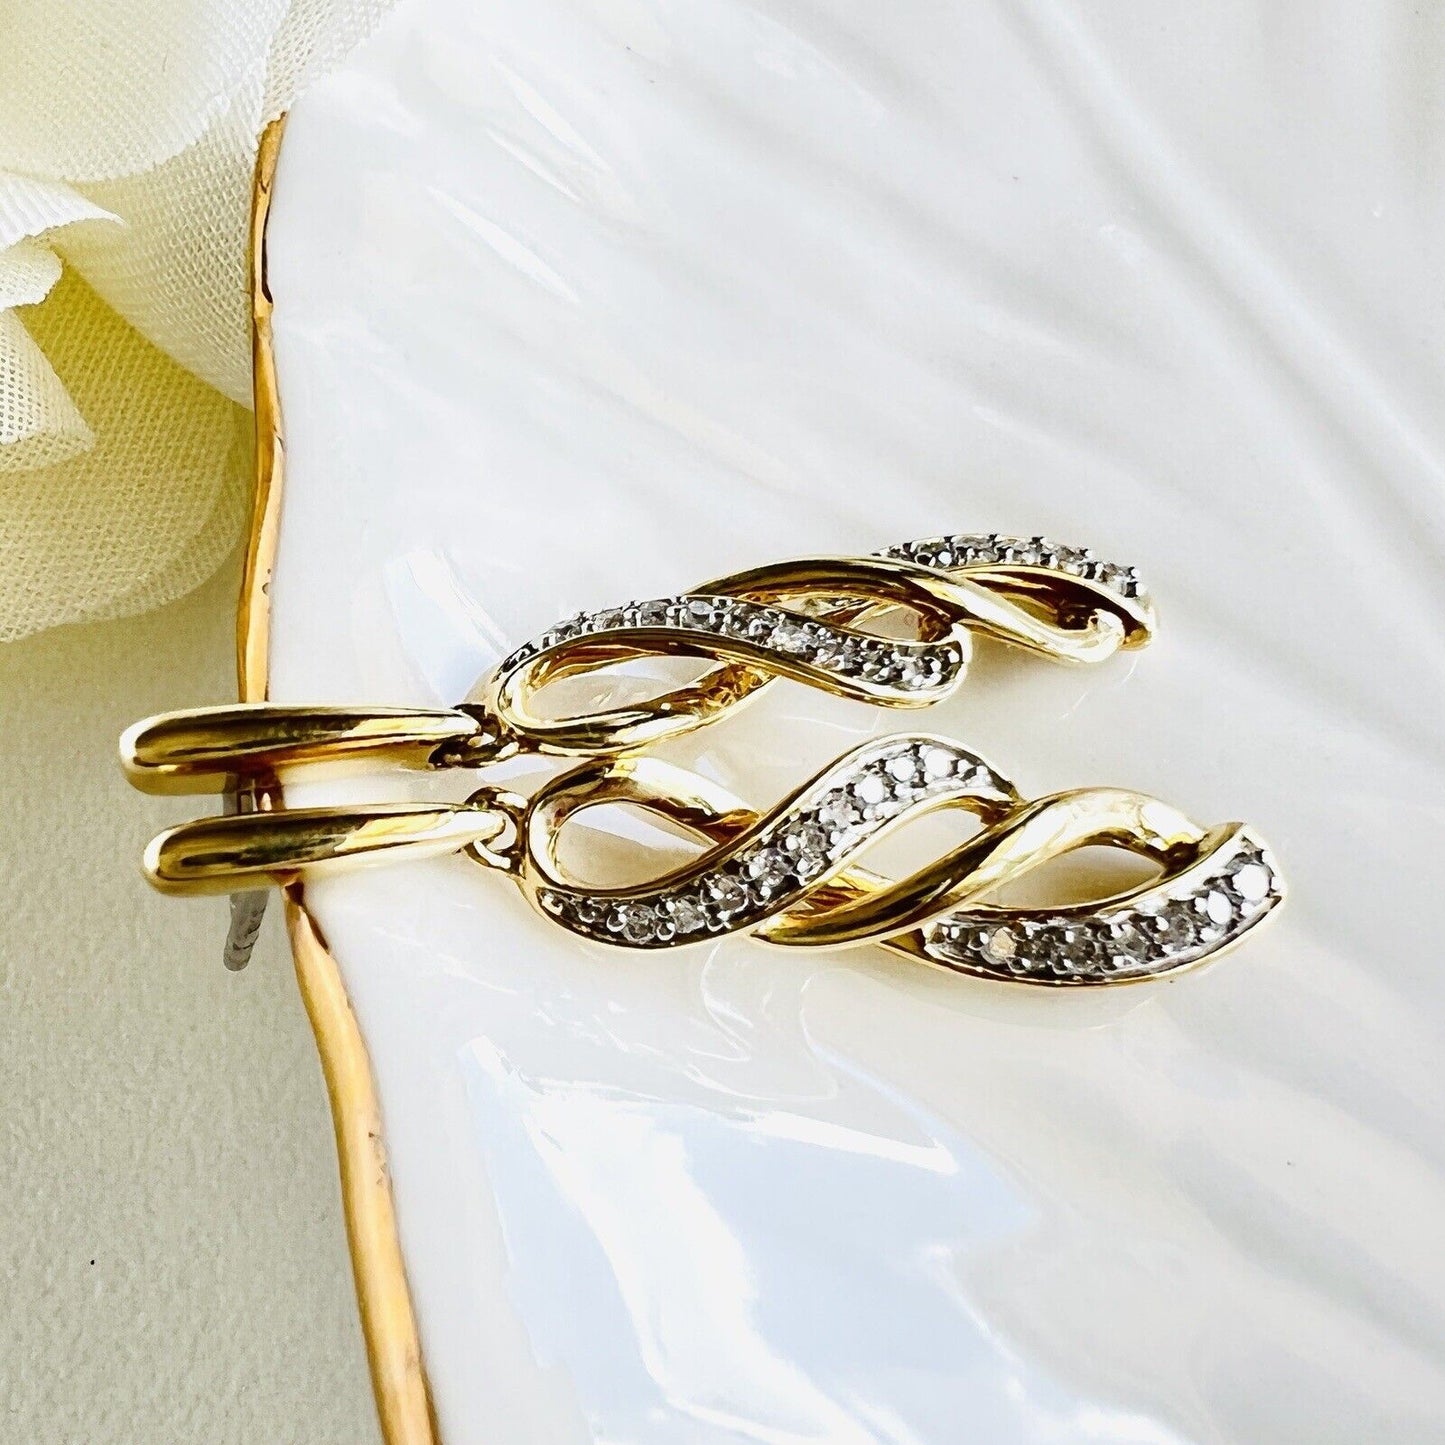 Solid 10k Yellow Gold & Diamond Flat Spiral Dangle/Drop Earrings, New 1.20"